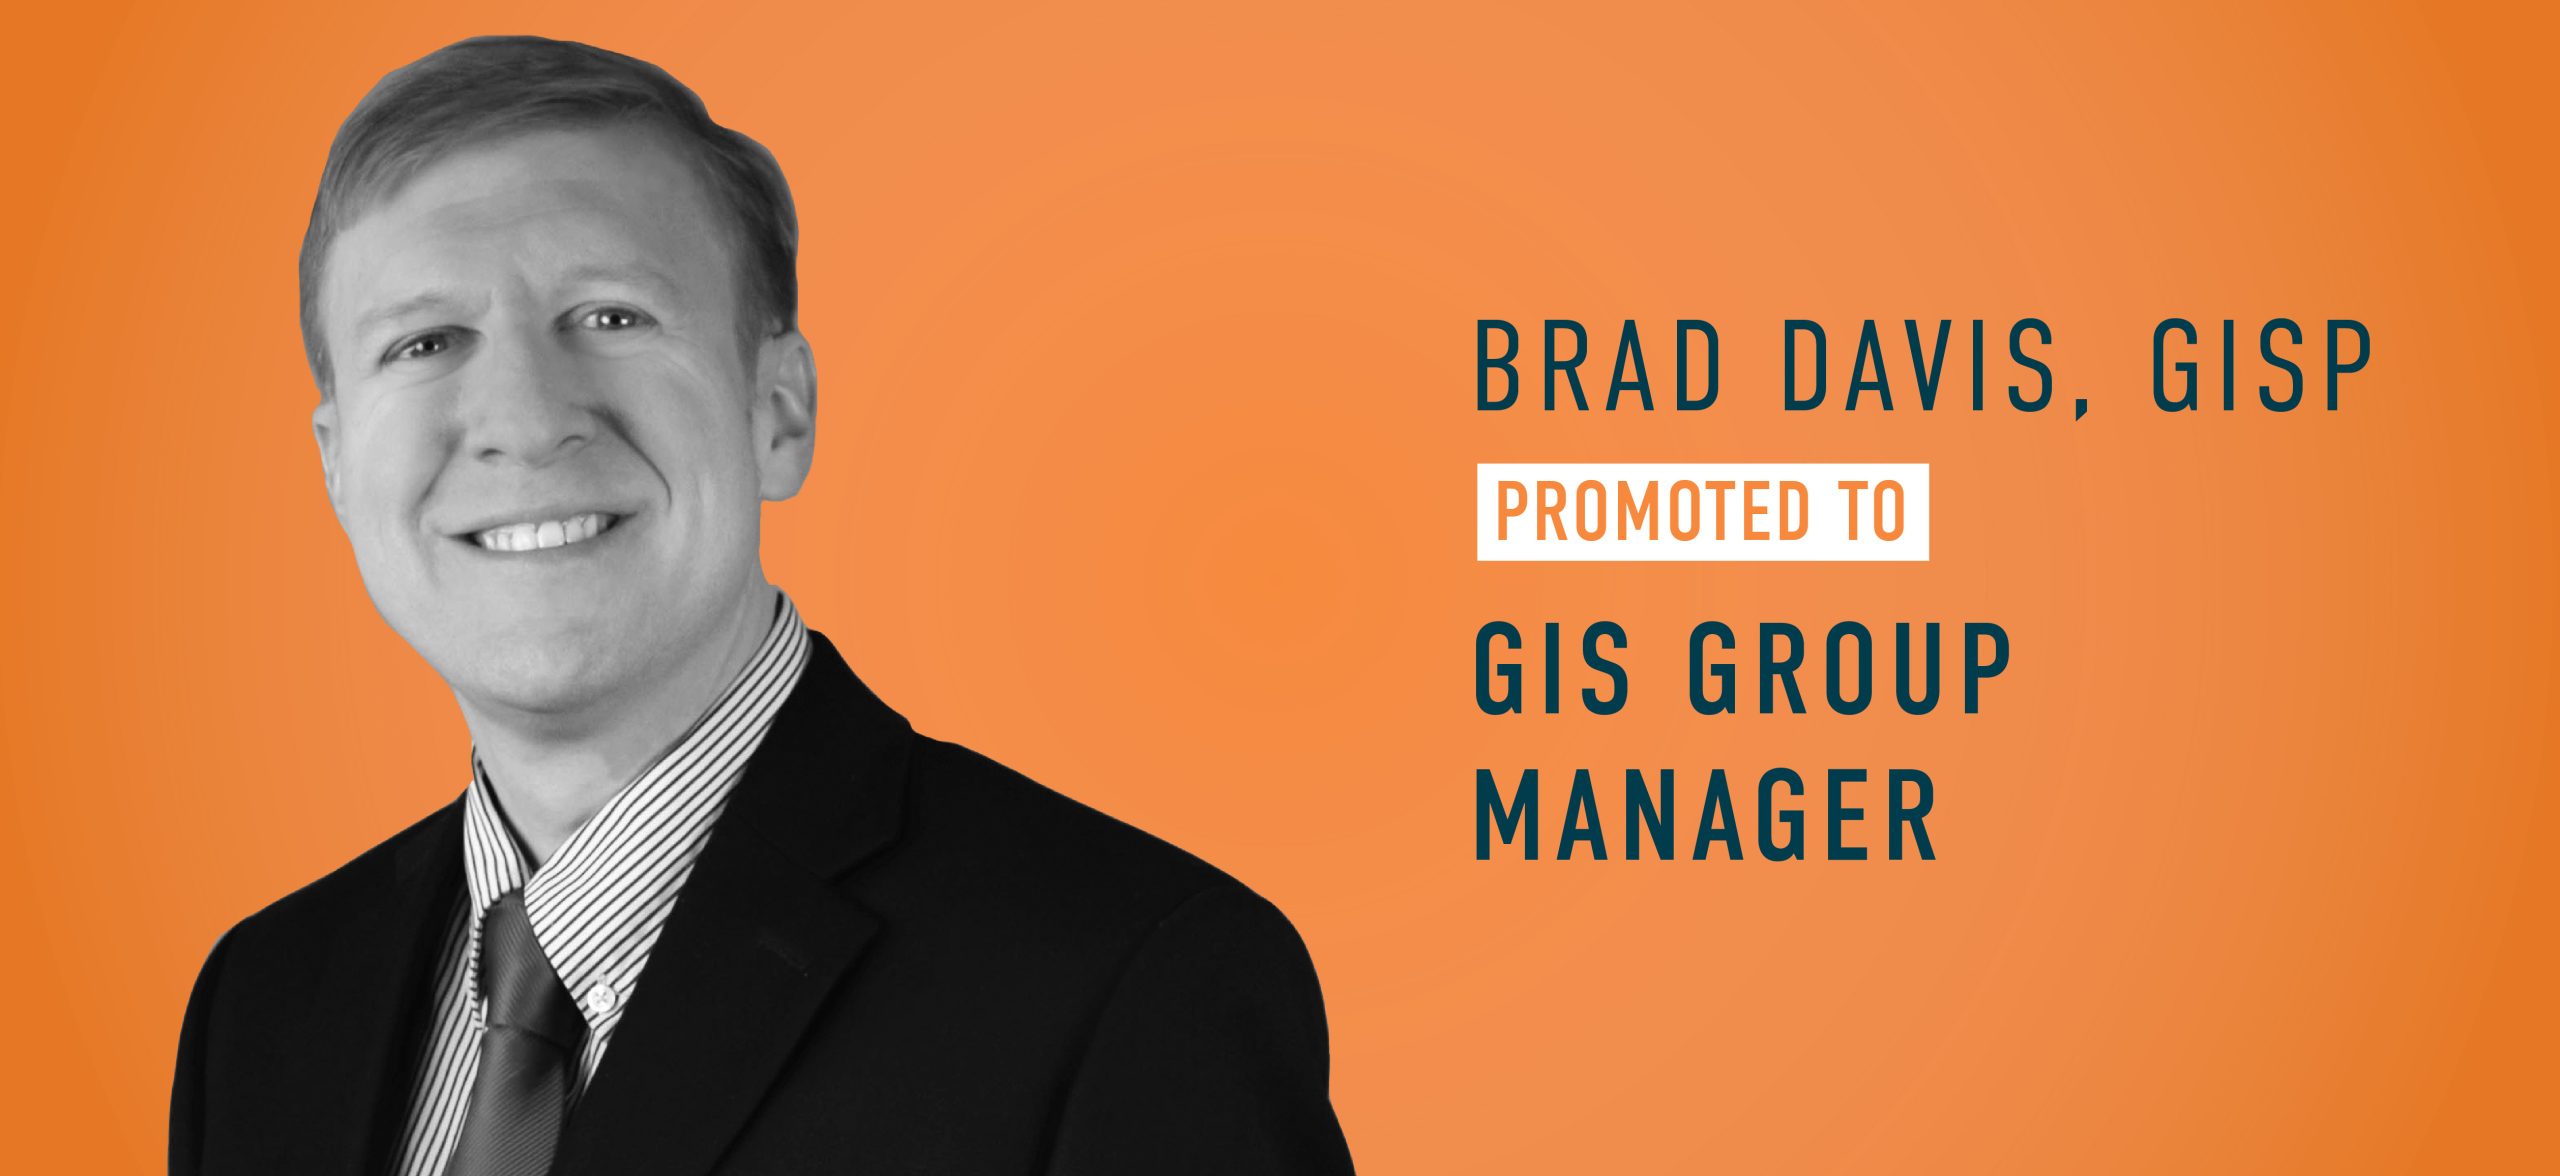 Brad Davis, GISP, Promoted to GIS Group Manager